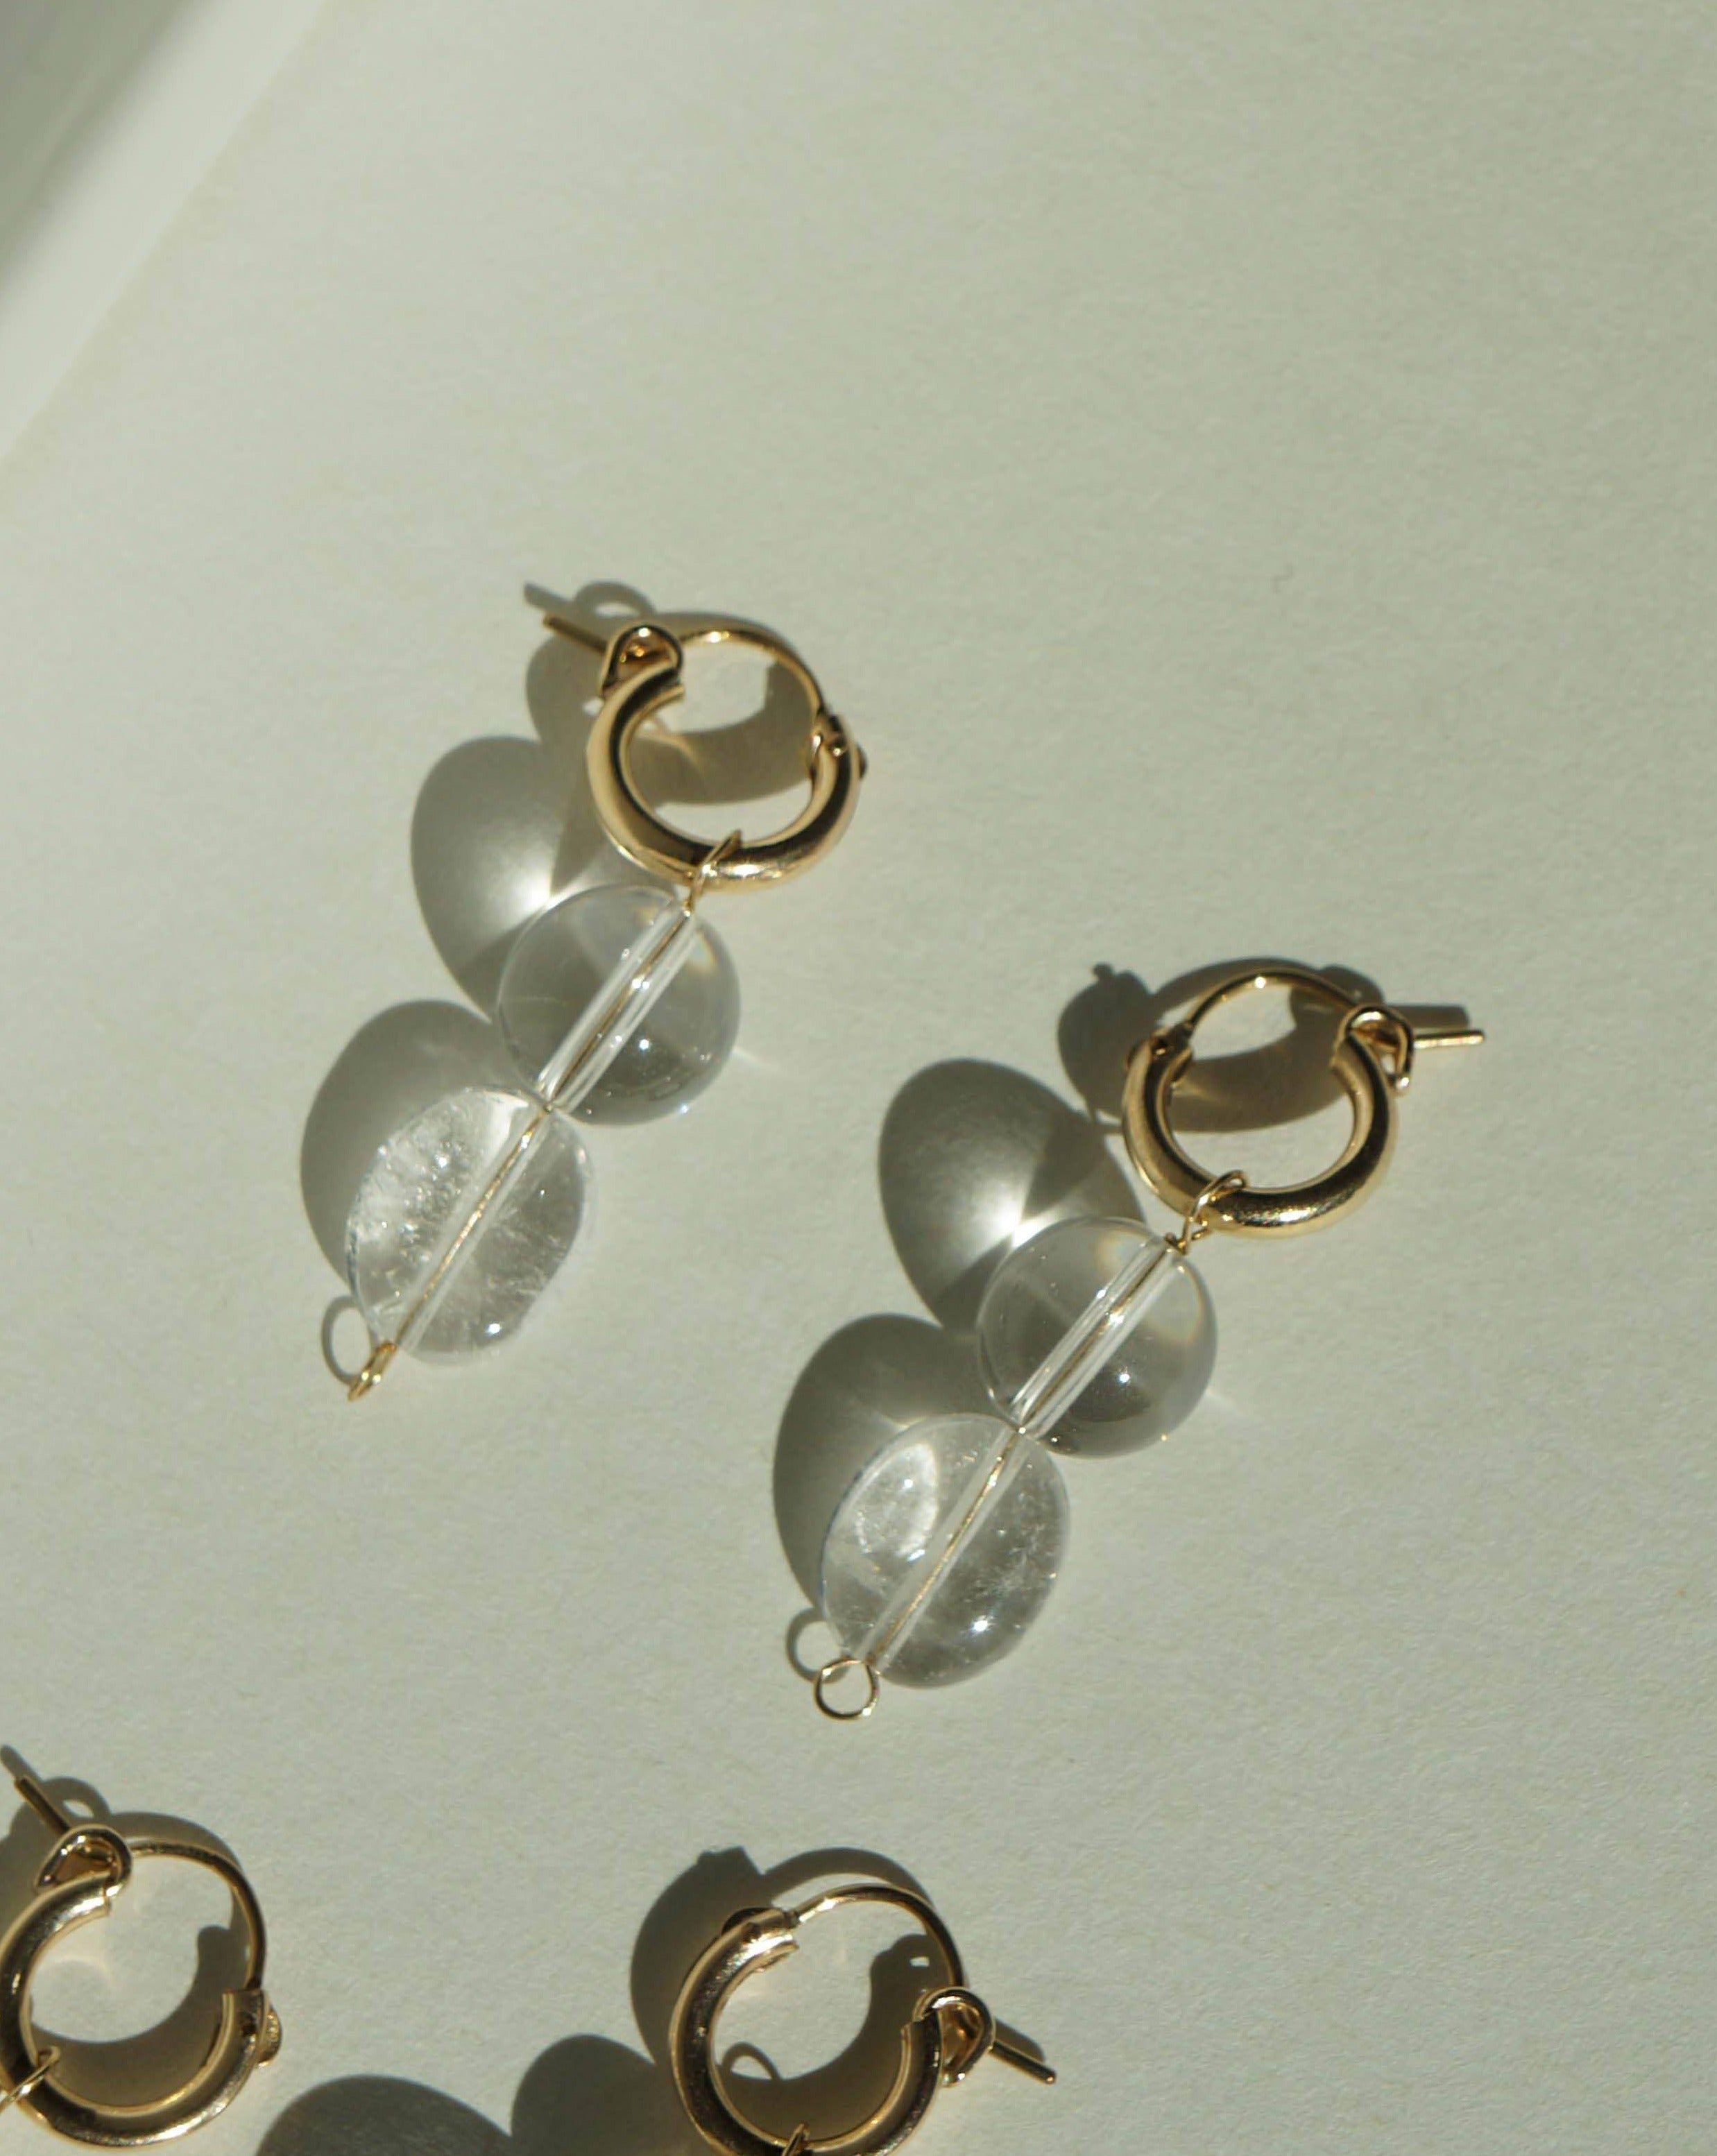 Lai Hoops Earrings by KOZAKH. 12mm snap closure hoop earrings, crafted in 14K Gold Filled, featuring Crystal Quartz.